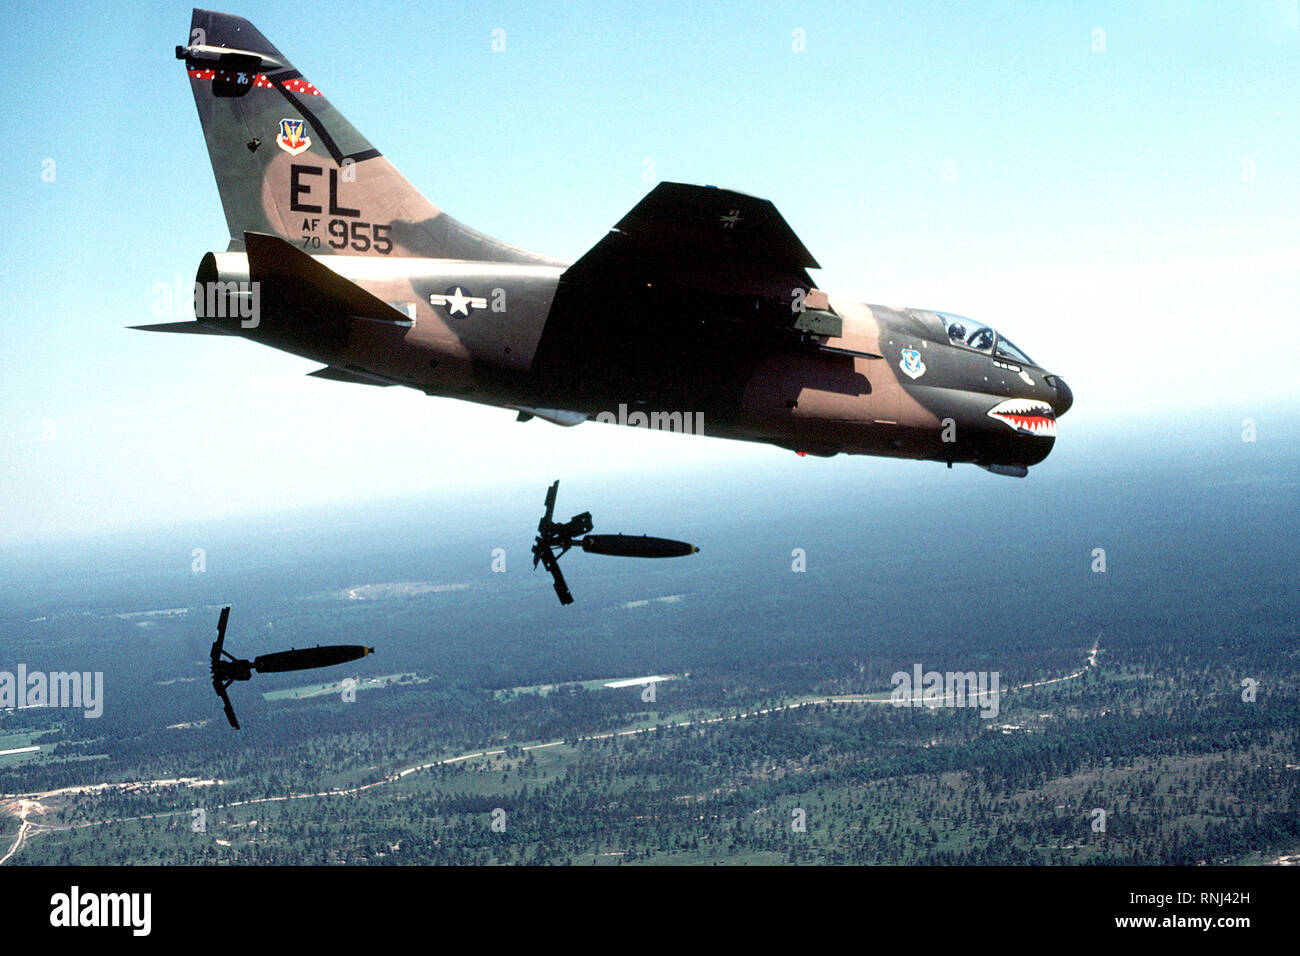 A 7d corsair ii aircraft hi-res stock photography and images - Alamy